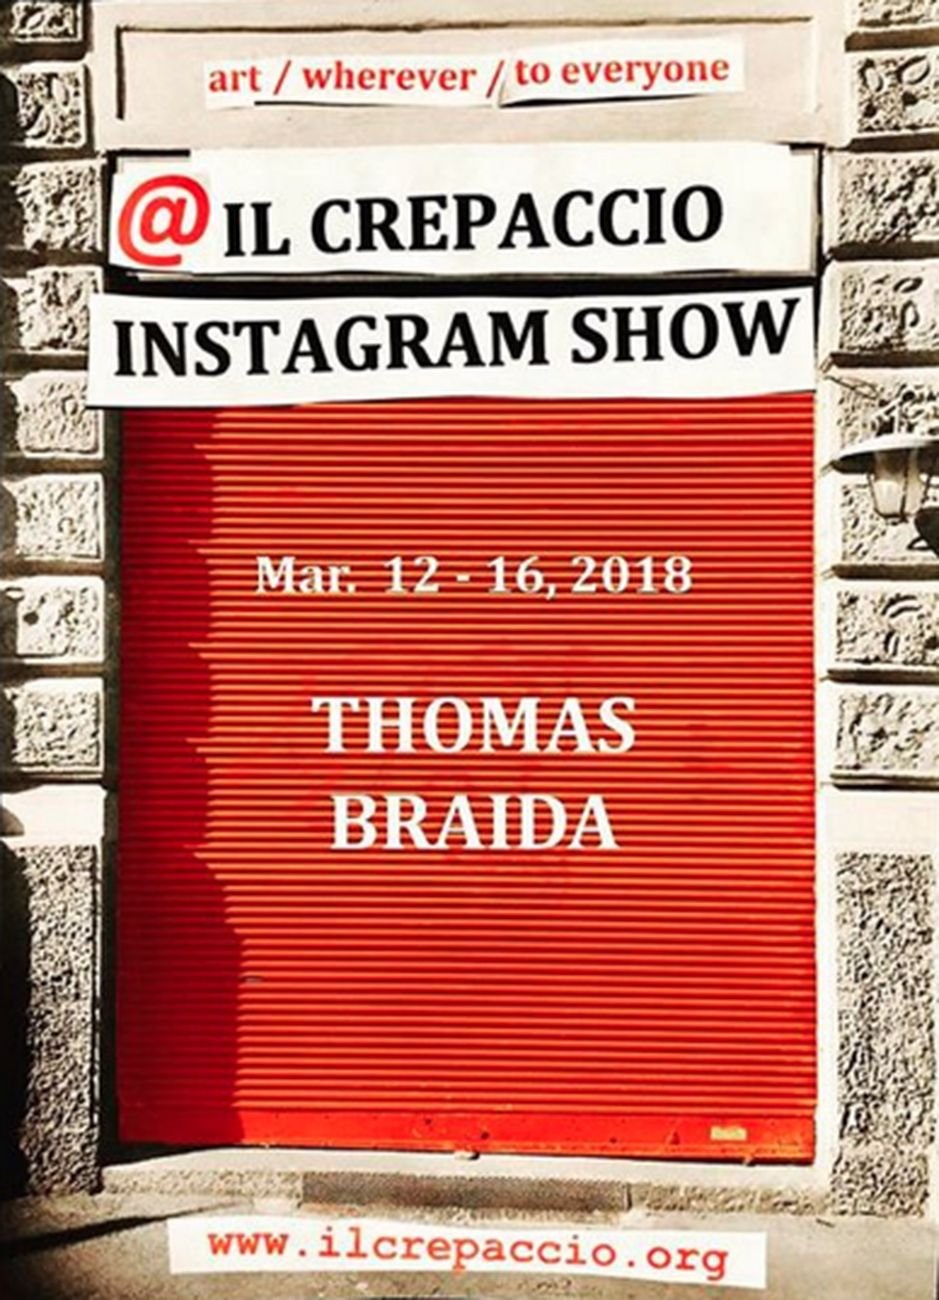 Il Crepaccio @ Instagram show. Thomas Braida